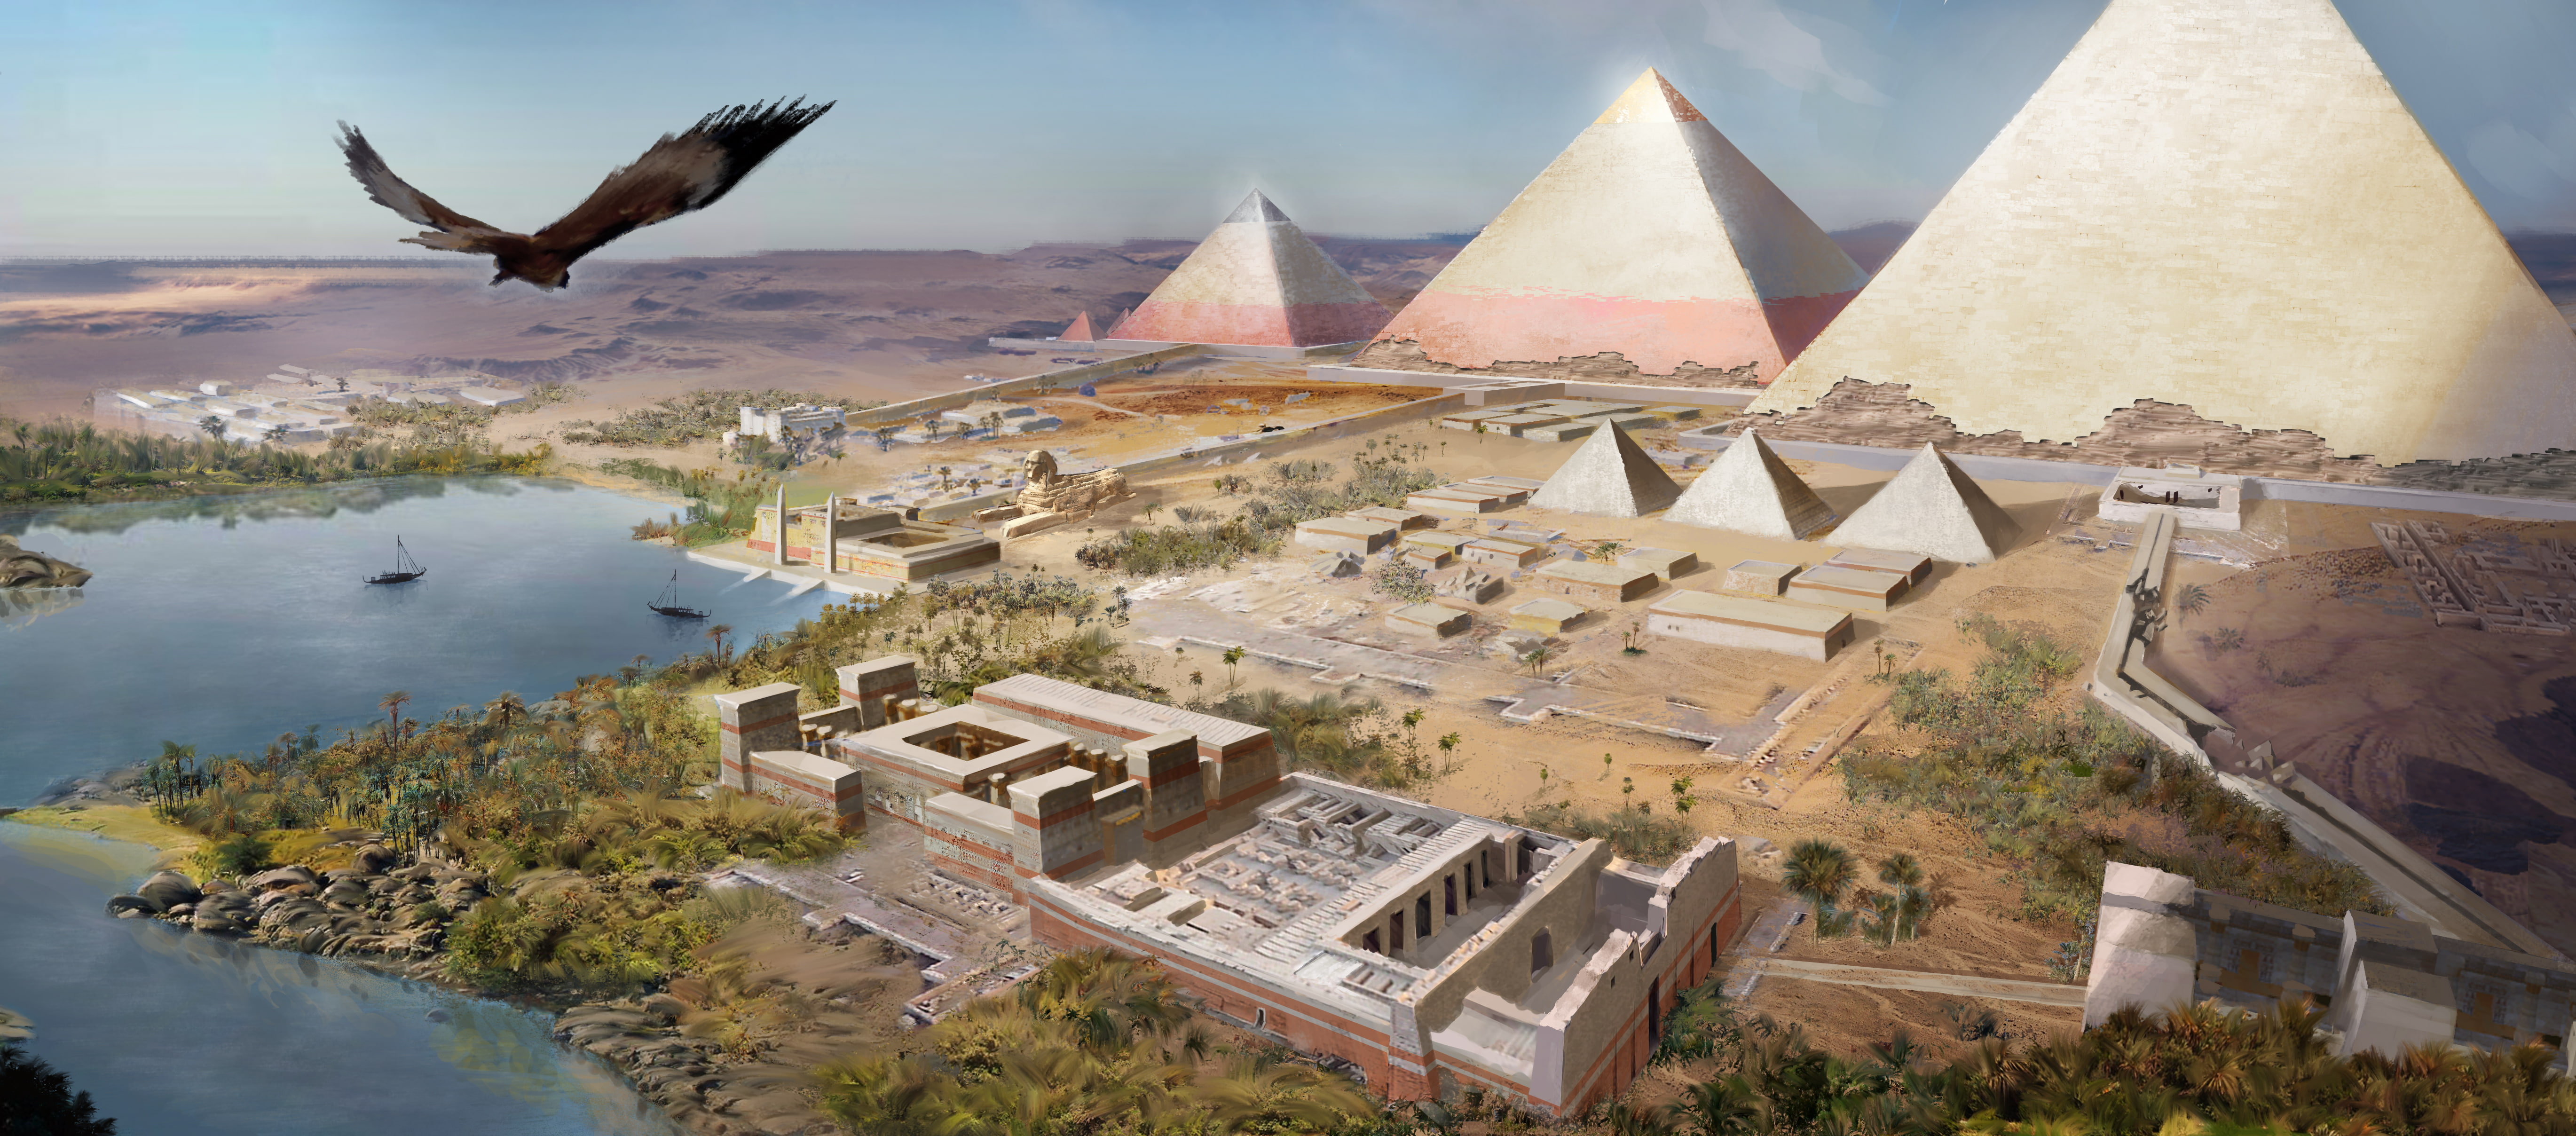 Pyramids of giza HD wallpaper free download